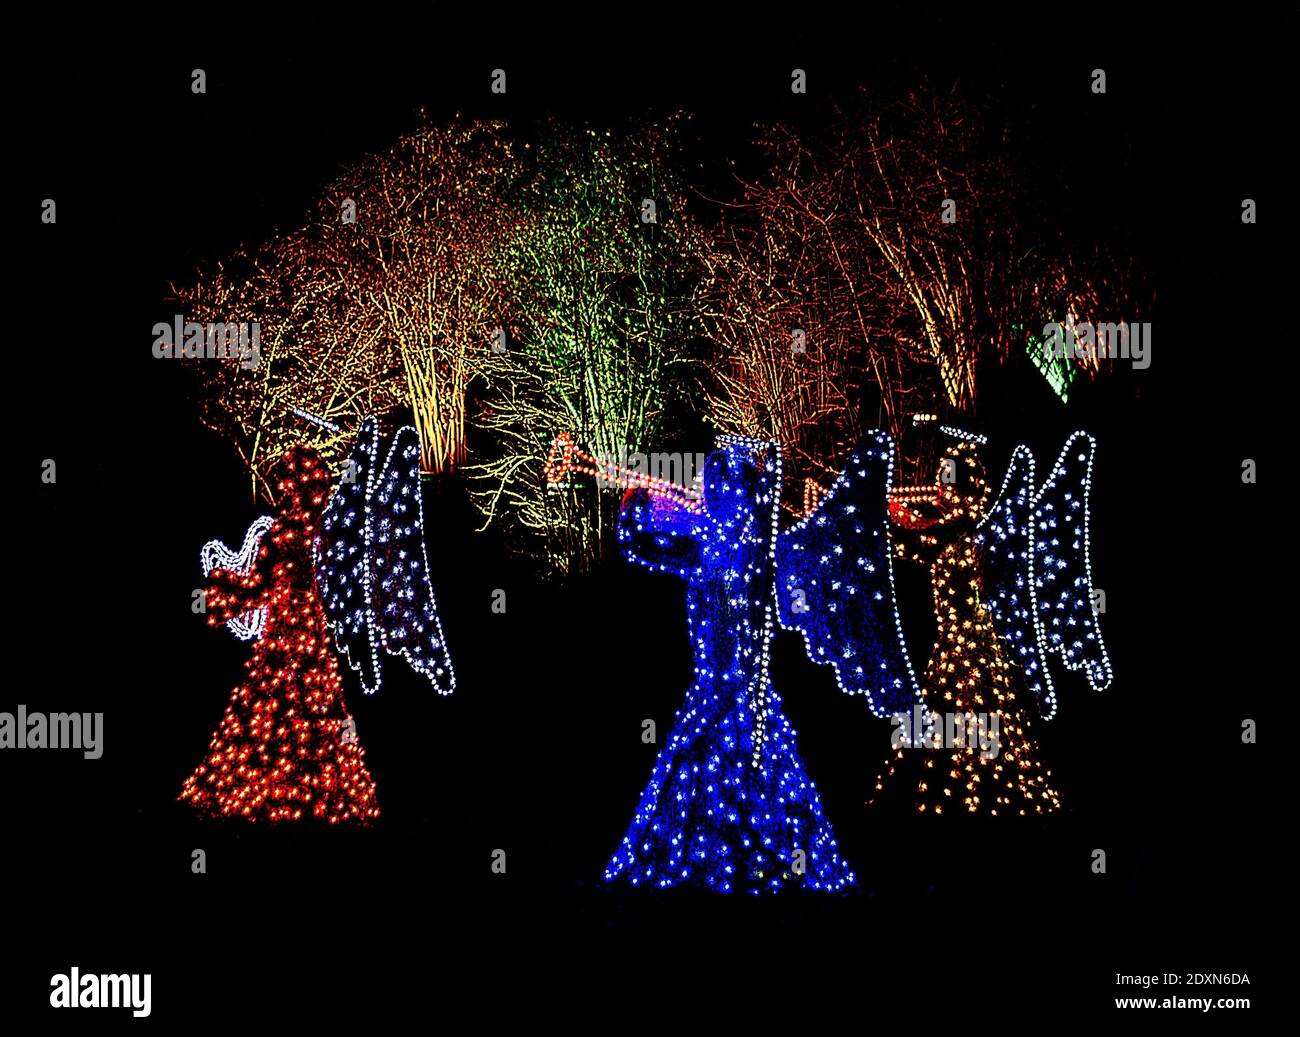 Outdoor christmas illumination of three angels playing music instruments Stock Photo